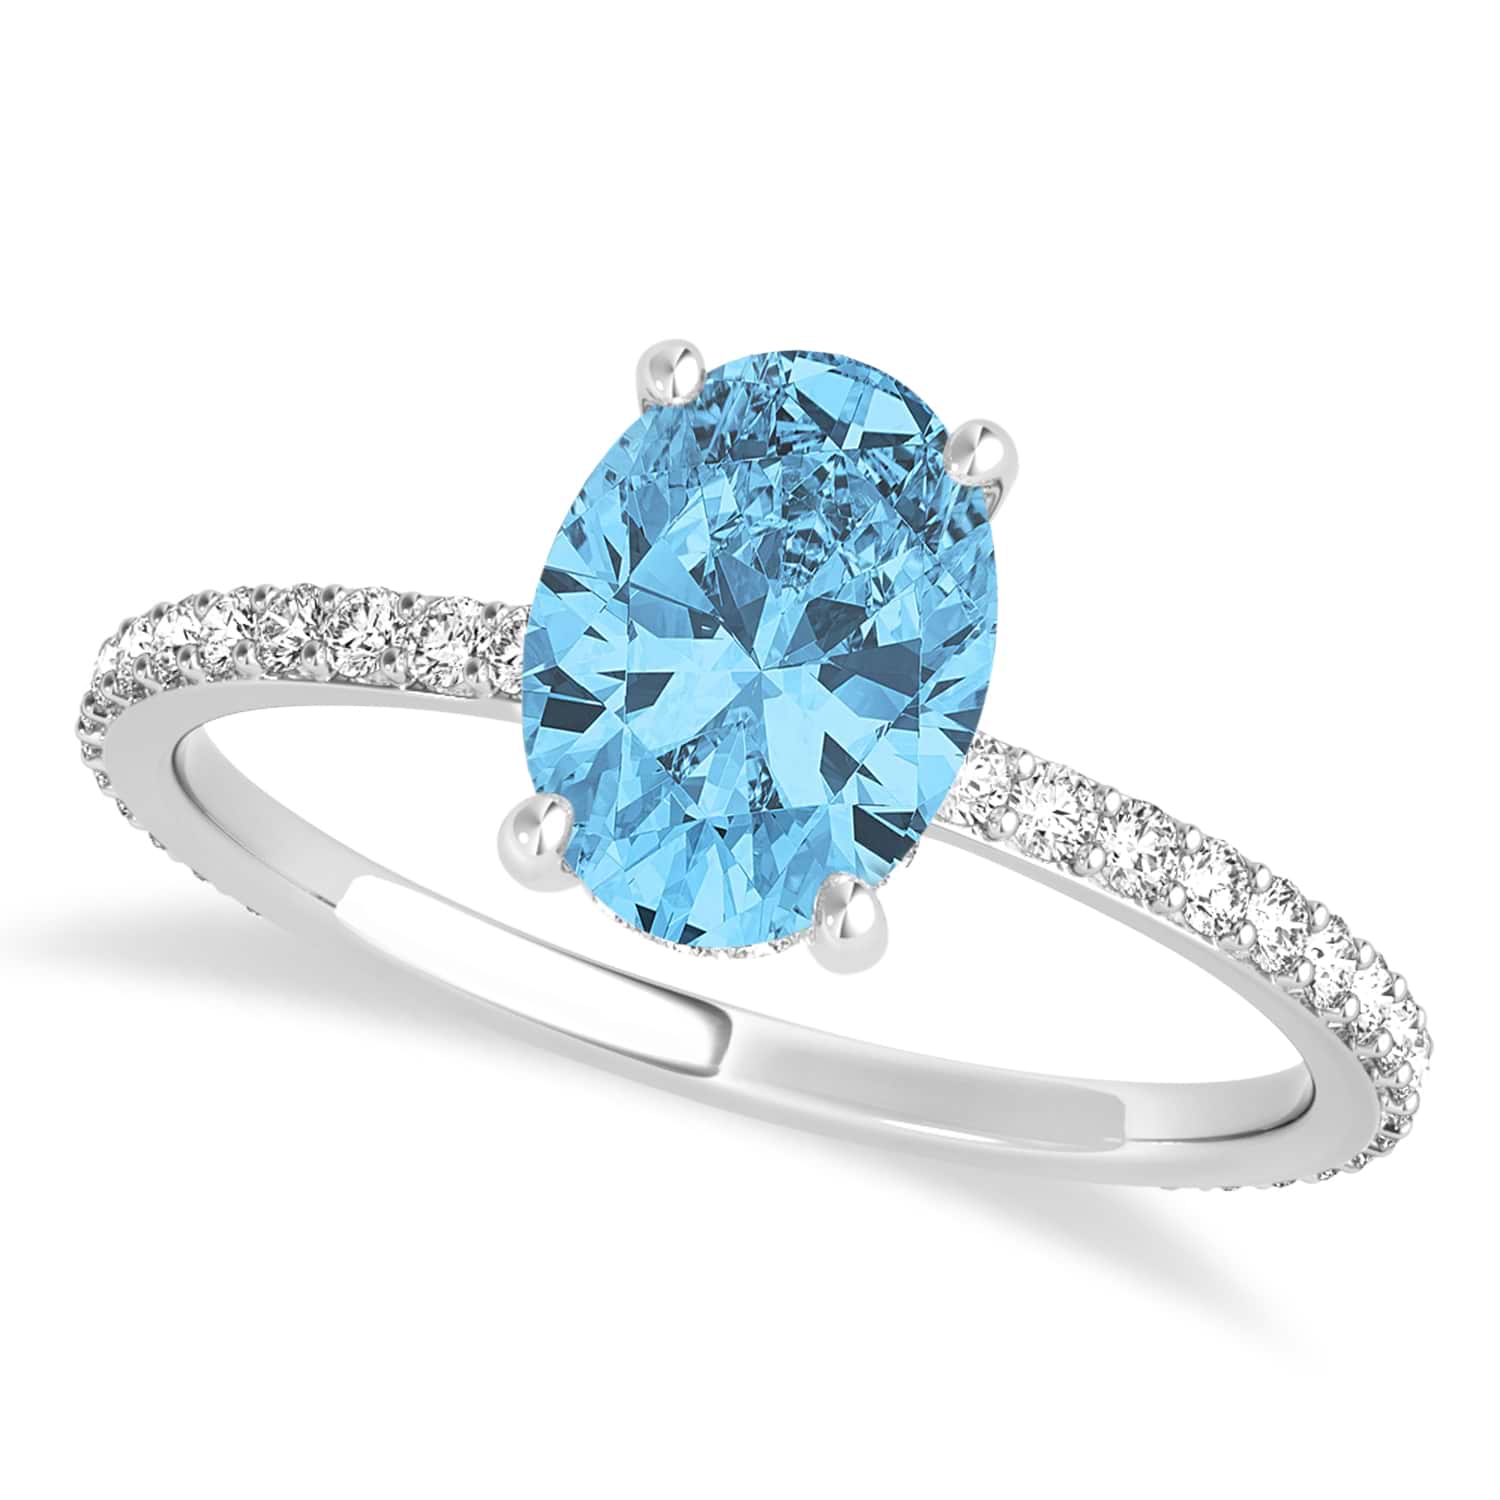 Oval Blue Topaz & Diamond Hidden Halo Engagement Ring Palladium (0.76ct)